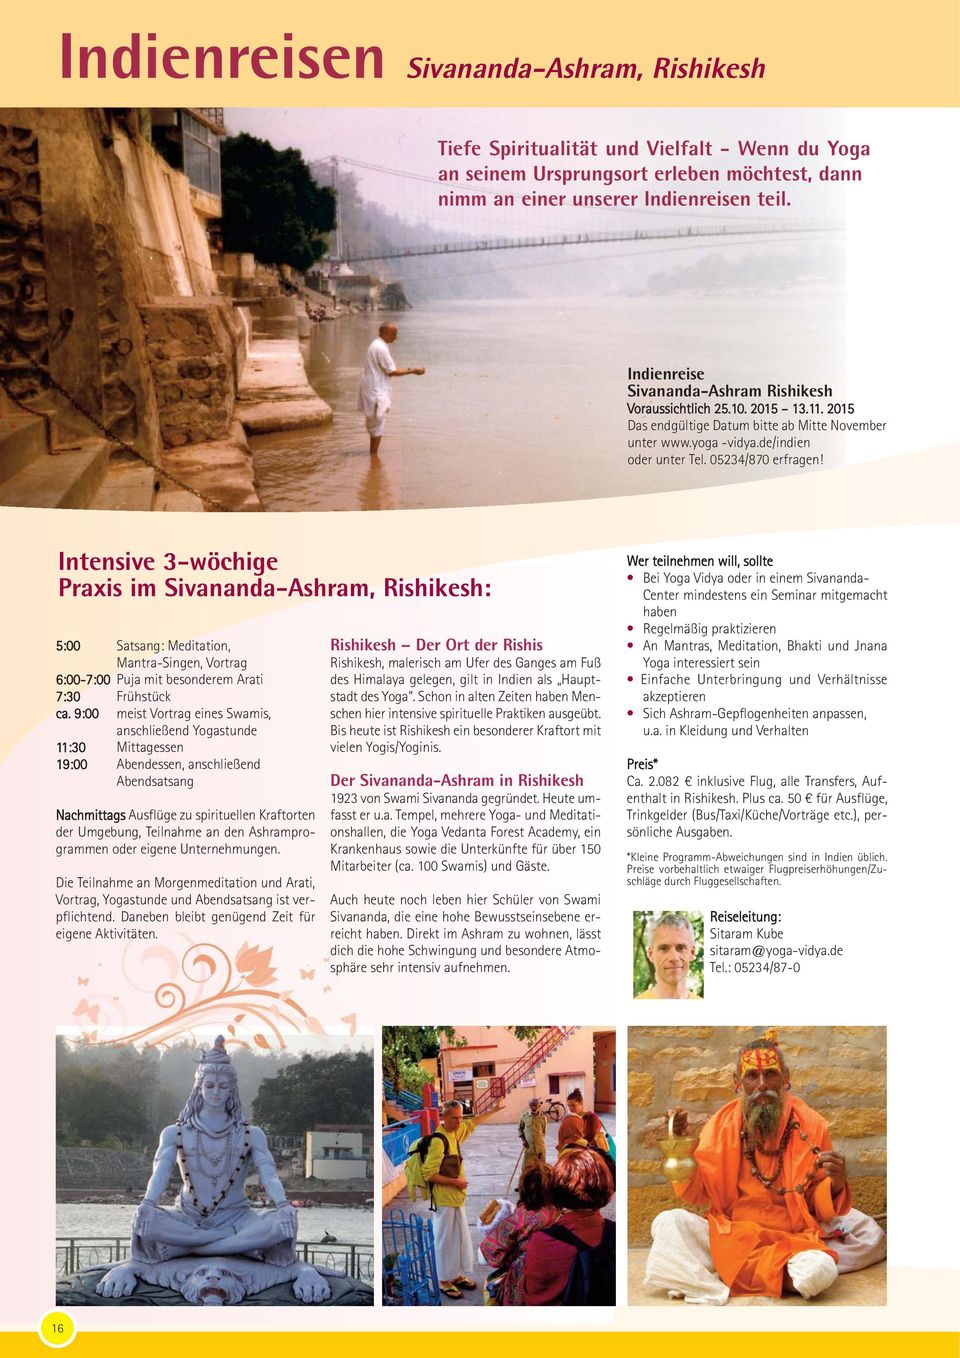 Intensive 3-wöchige Praxis im Sivananda-Ashram, Rishikesh: 5:00 Satsang: Meditation, Mantra-Singen, Vortrag 6:00-7:00 Puja mit besonderem Arati 7:30 Frühstück ca.